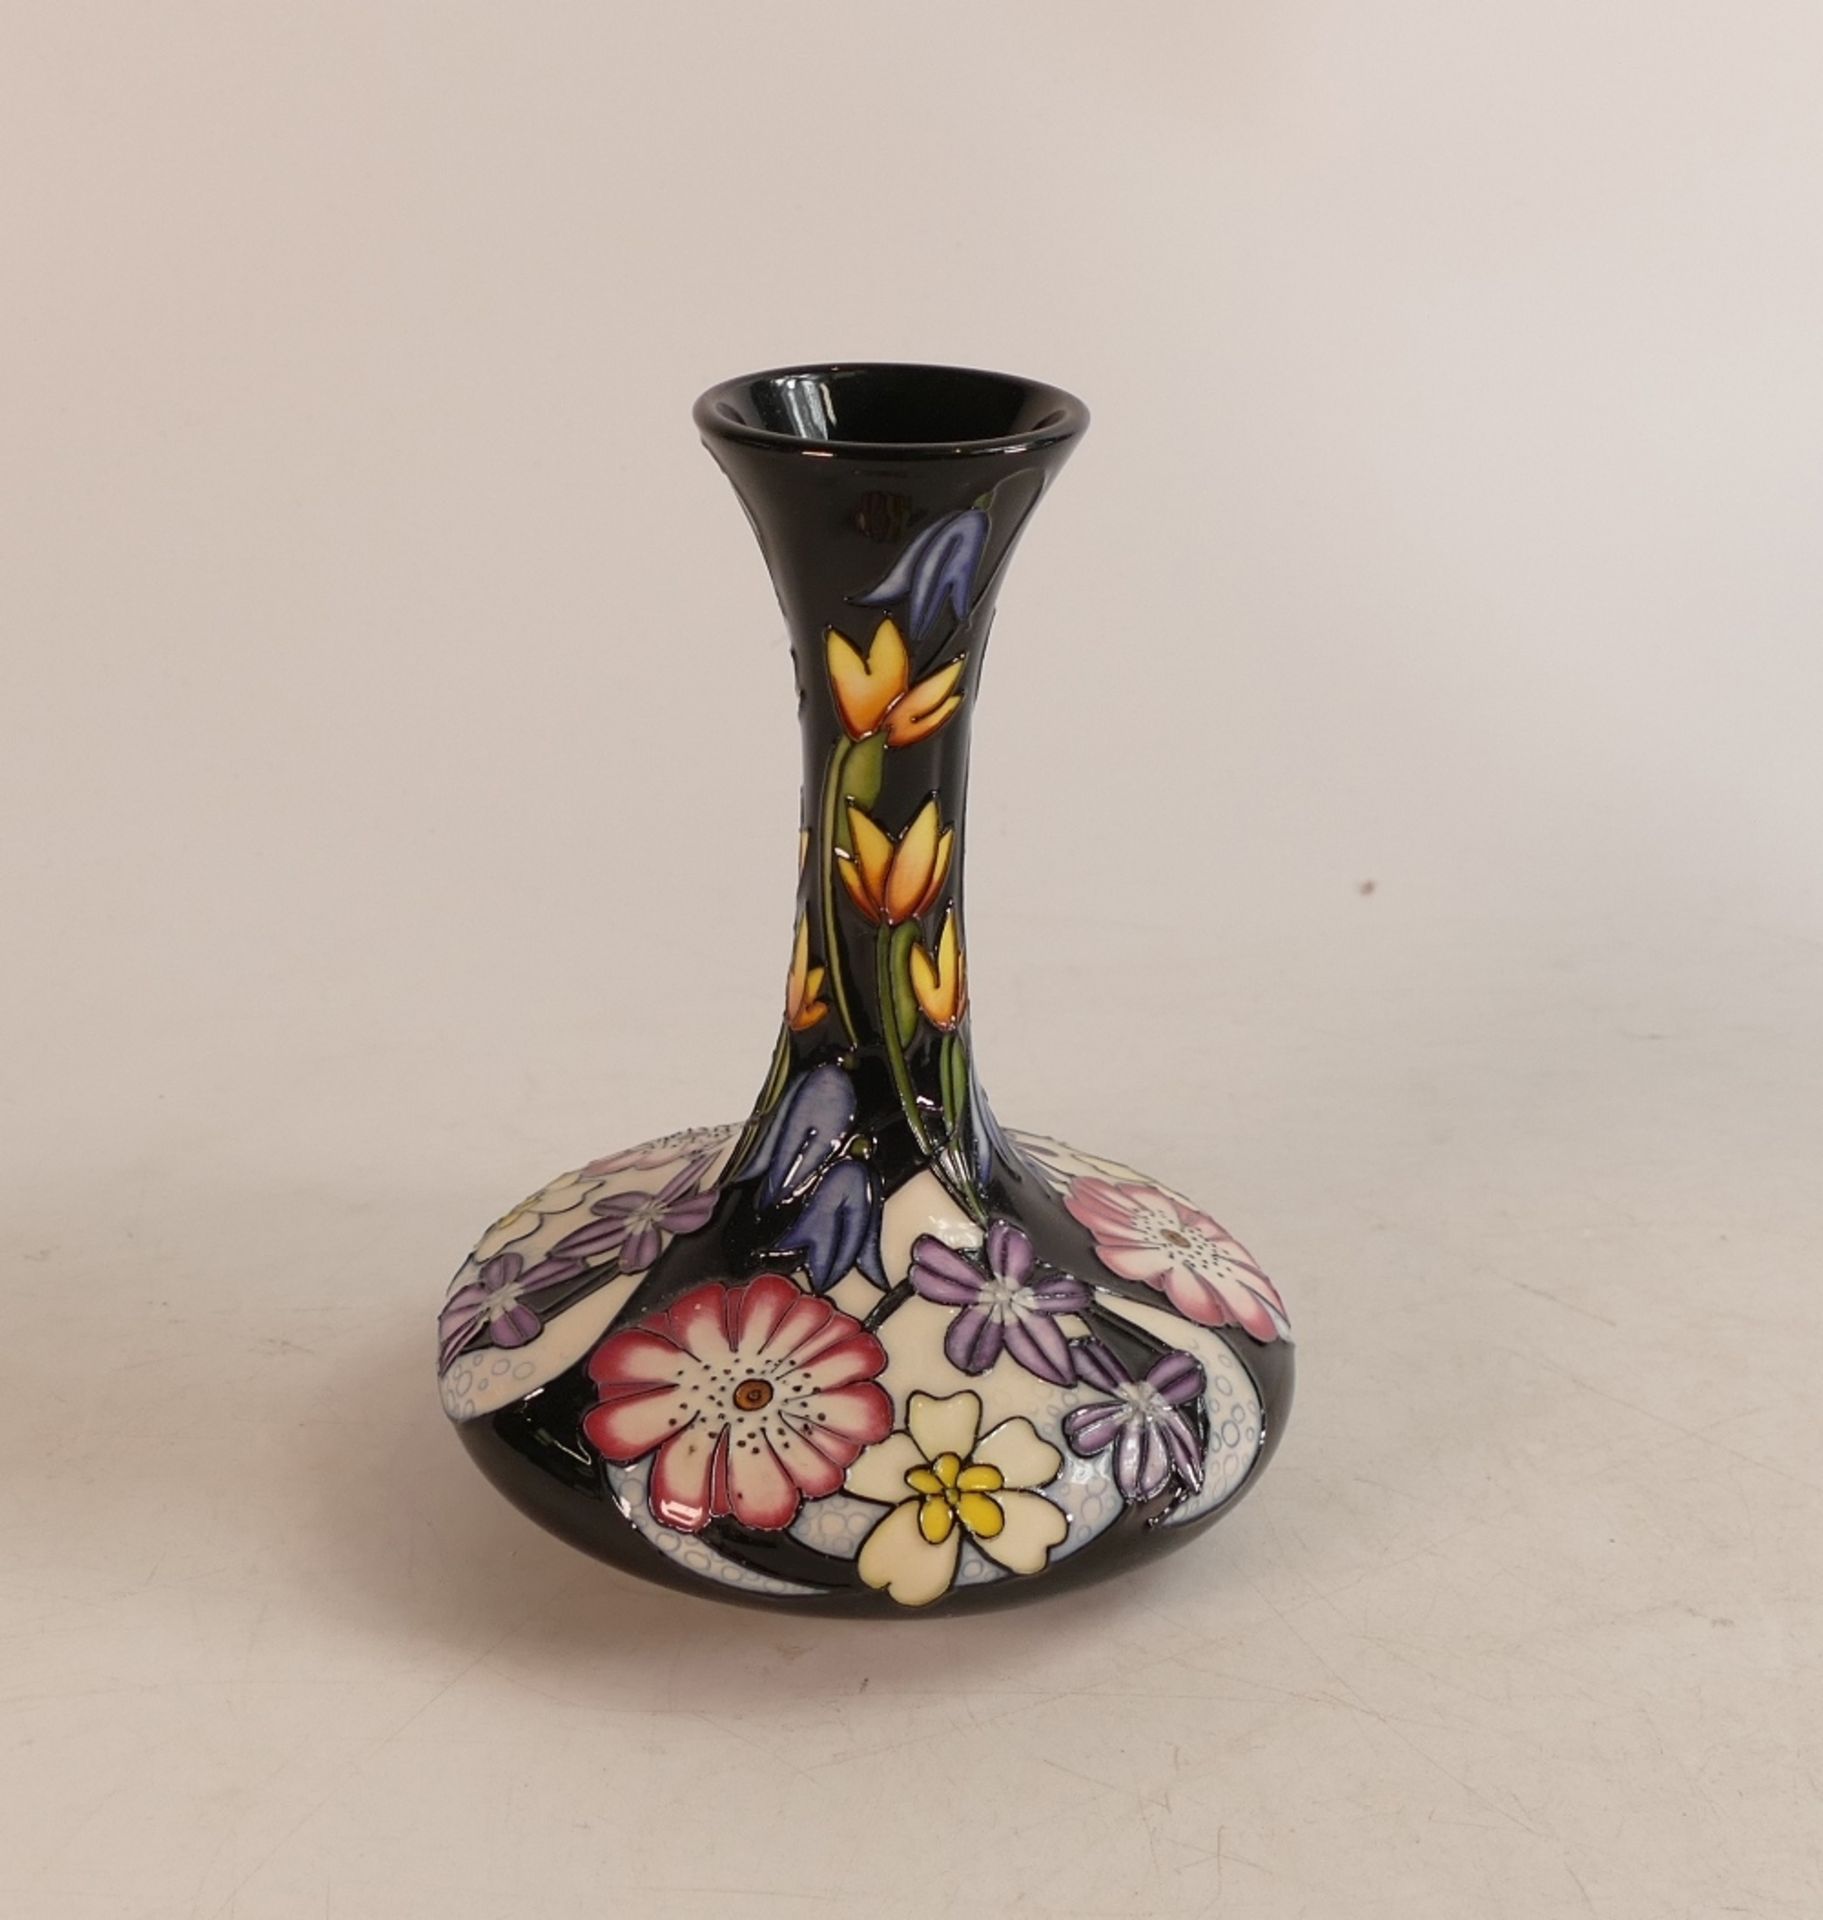 Moorcroft Faithful vase by Vicky Lovatt, number 53, dated 2015, signed, height 16cm